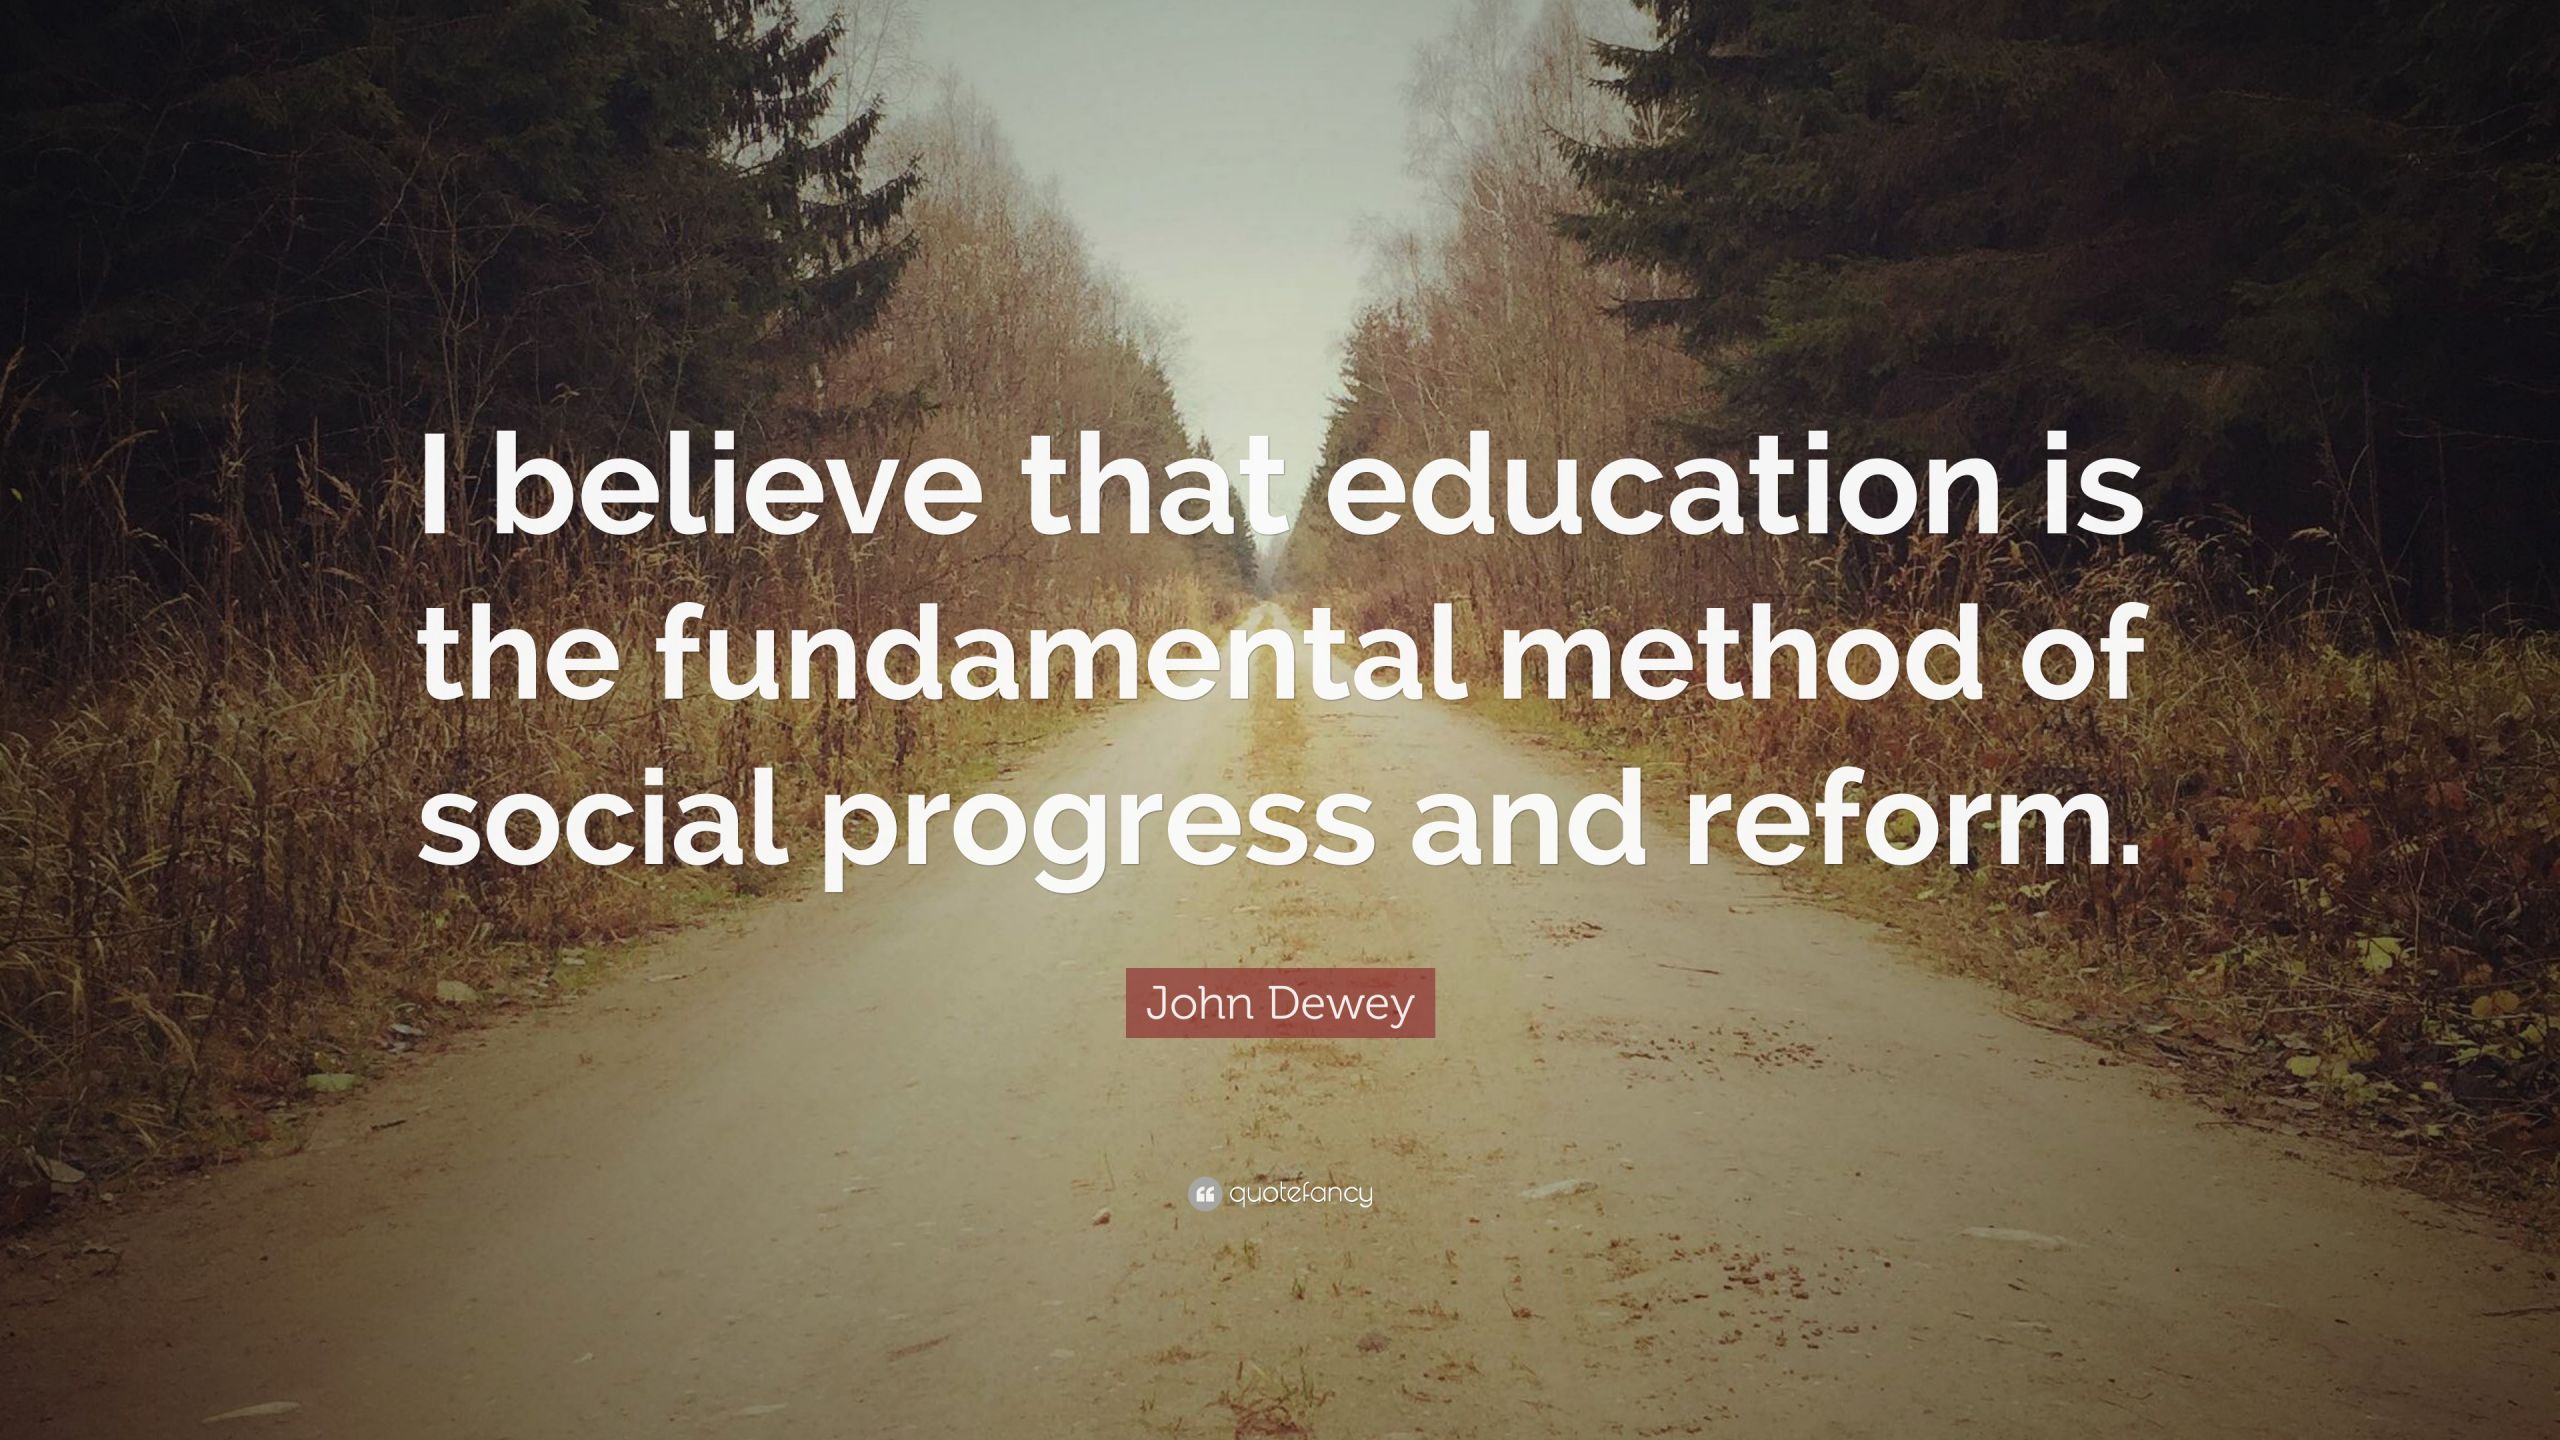 John Dewey Quotes Education
 John Dewey Quote “I believe that education is the